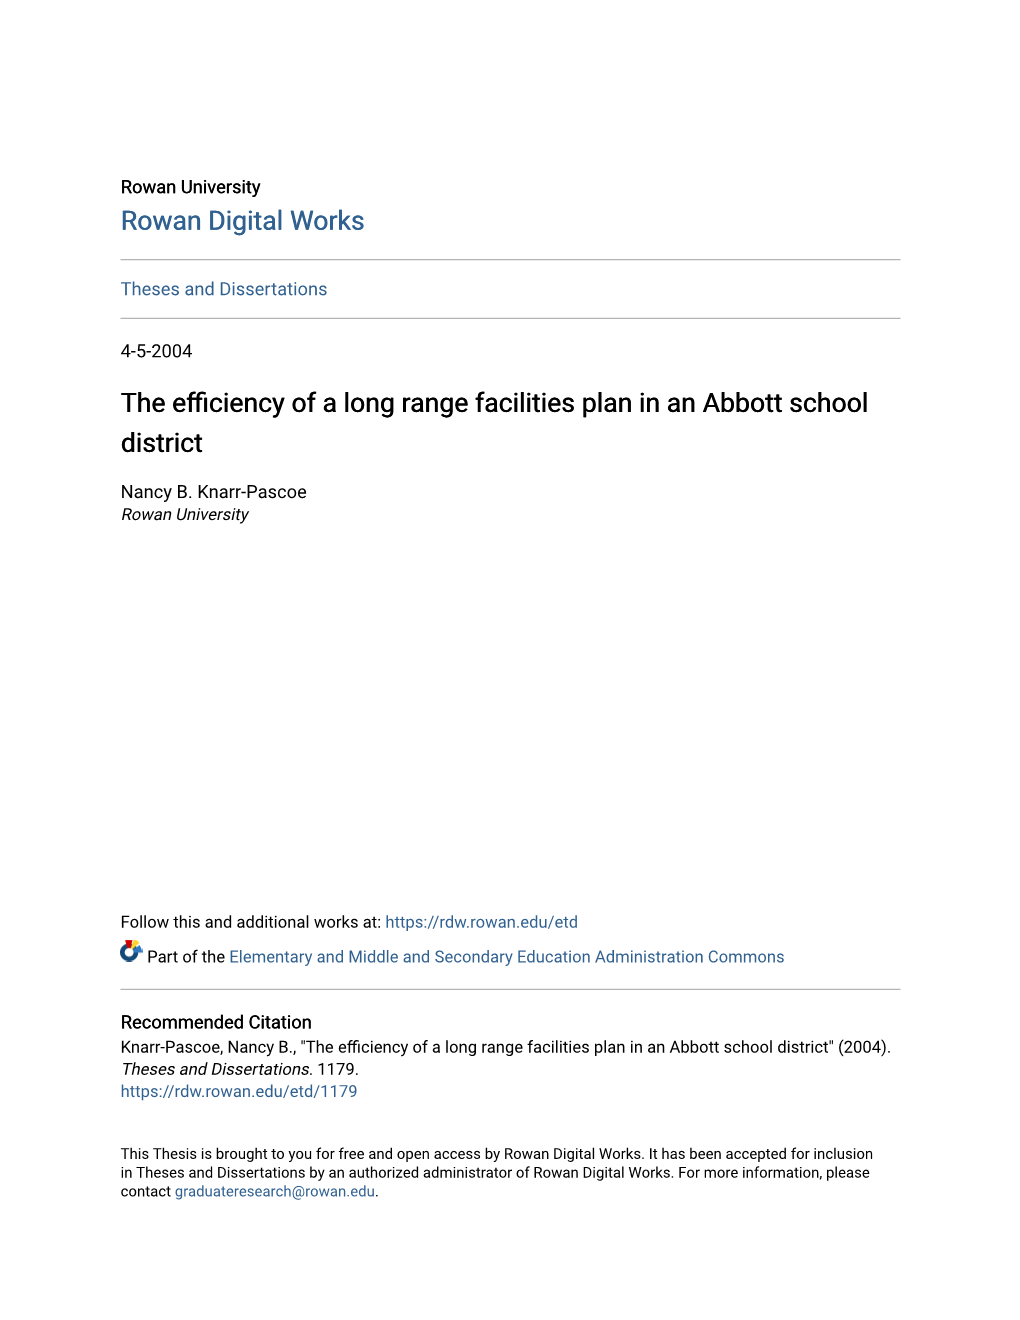 The Efficiency of a Long Range Facilities Plan in an Abbott School District